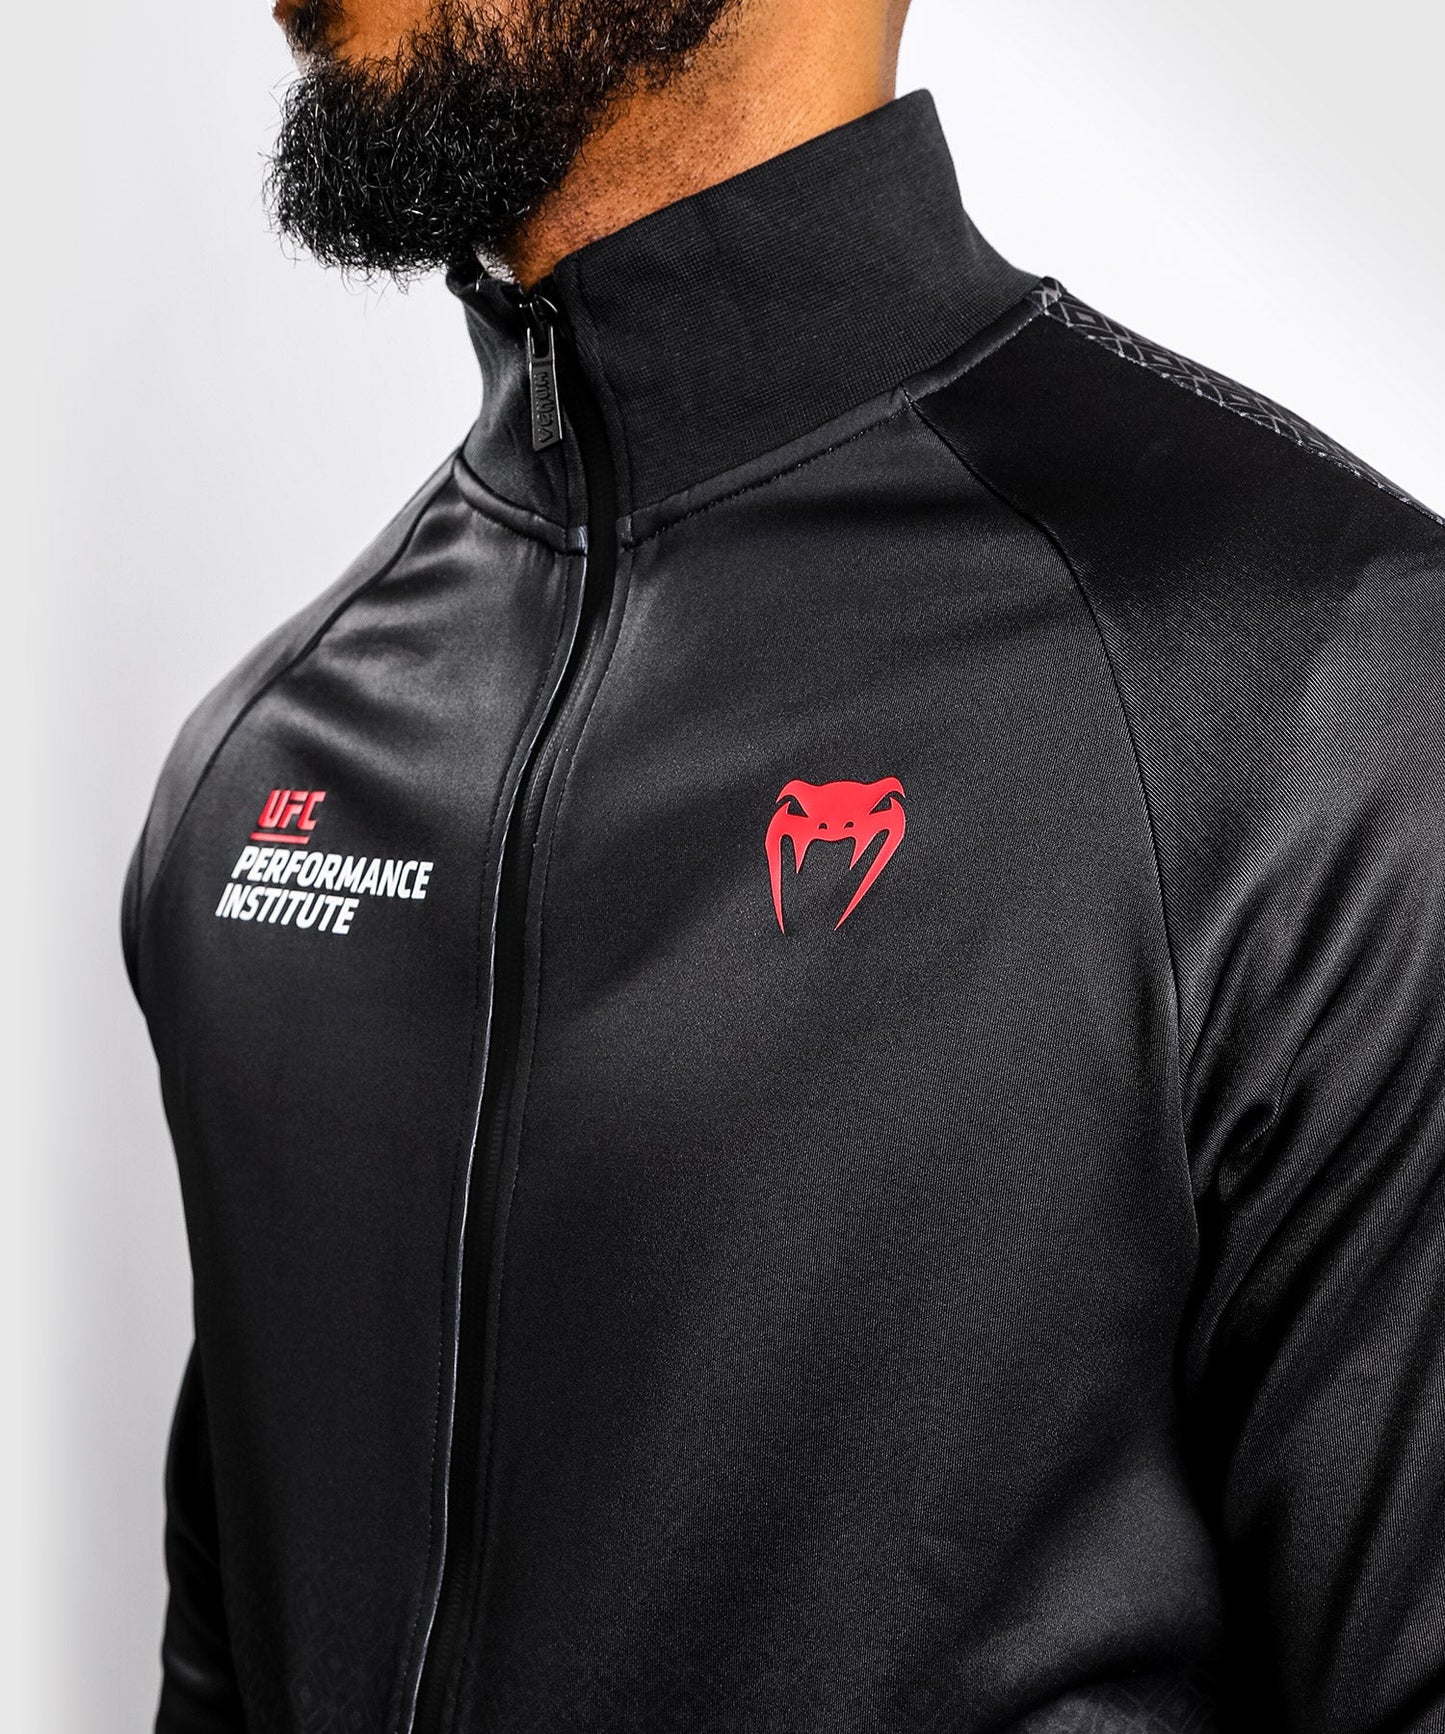 UFC Venum Performance Institute Track Jacket - Black/Red